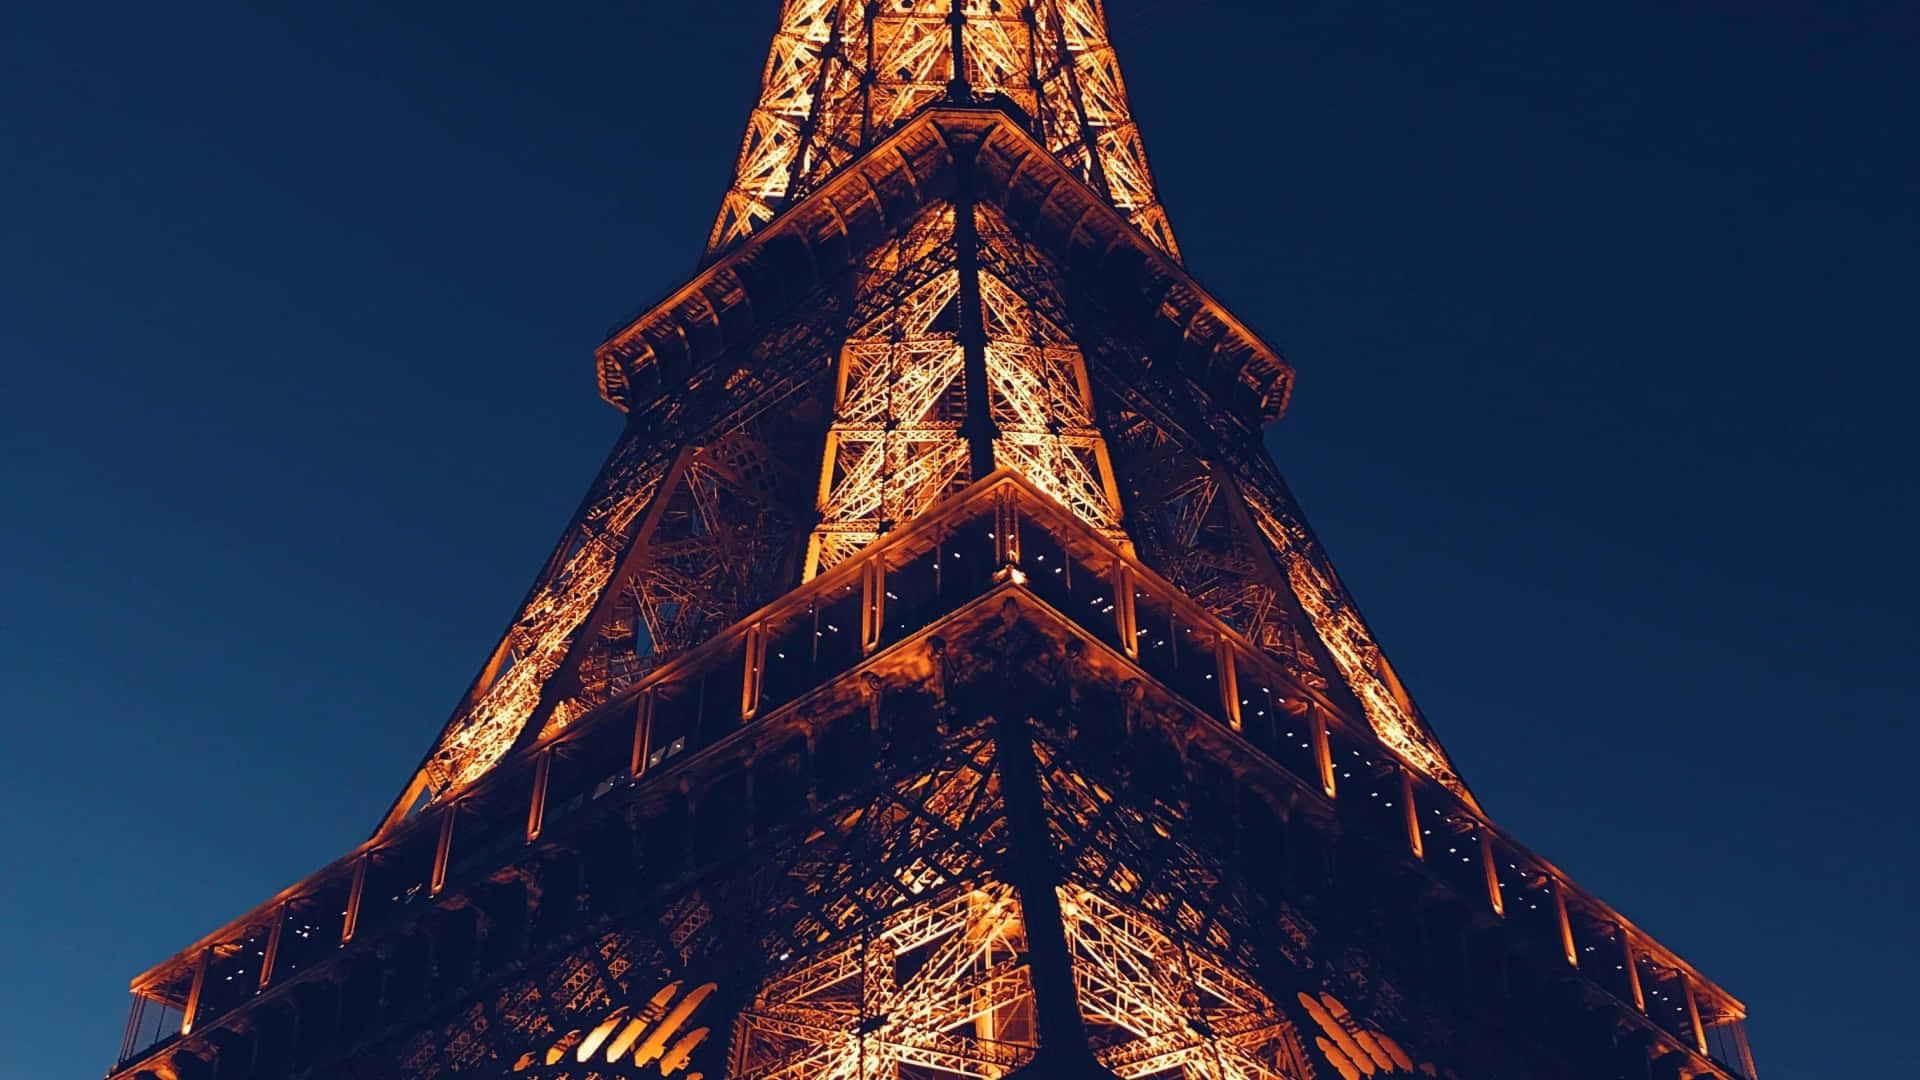 Skyscraper Eiffel Tower At Night Picture